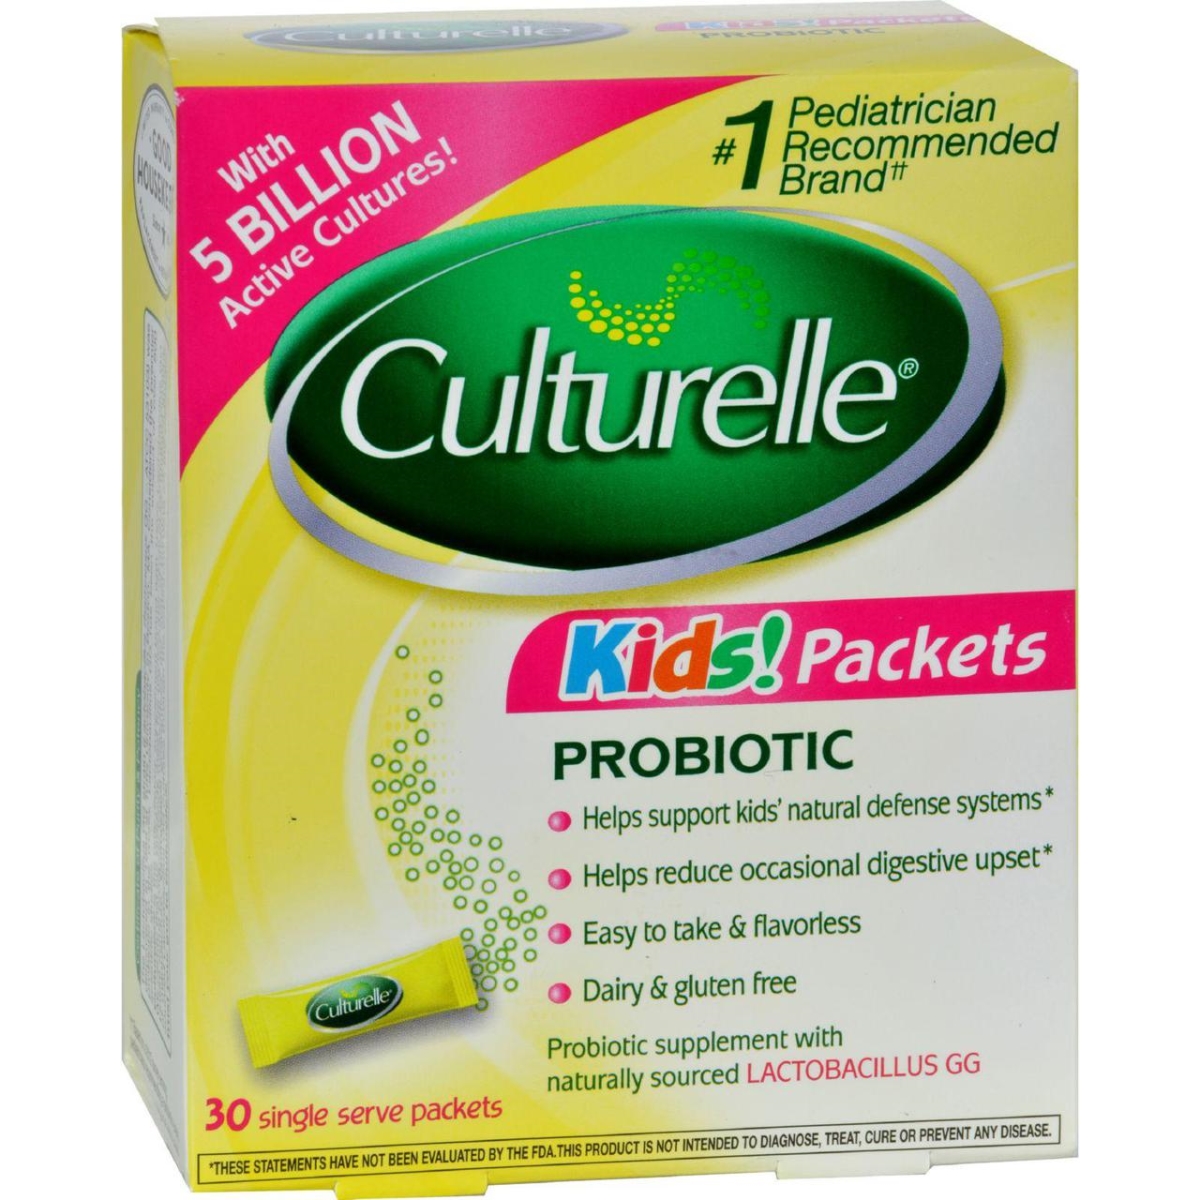 Hg0661769 Probiotics For Kids - 30 Packets